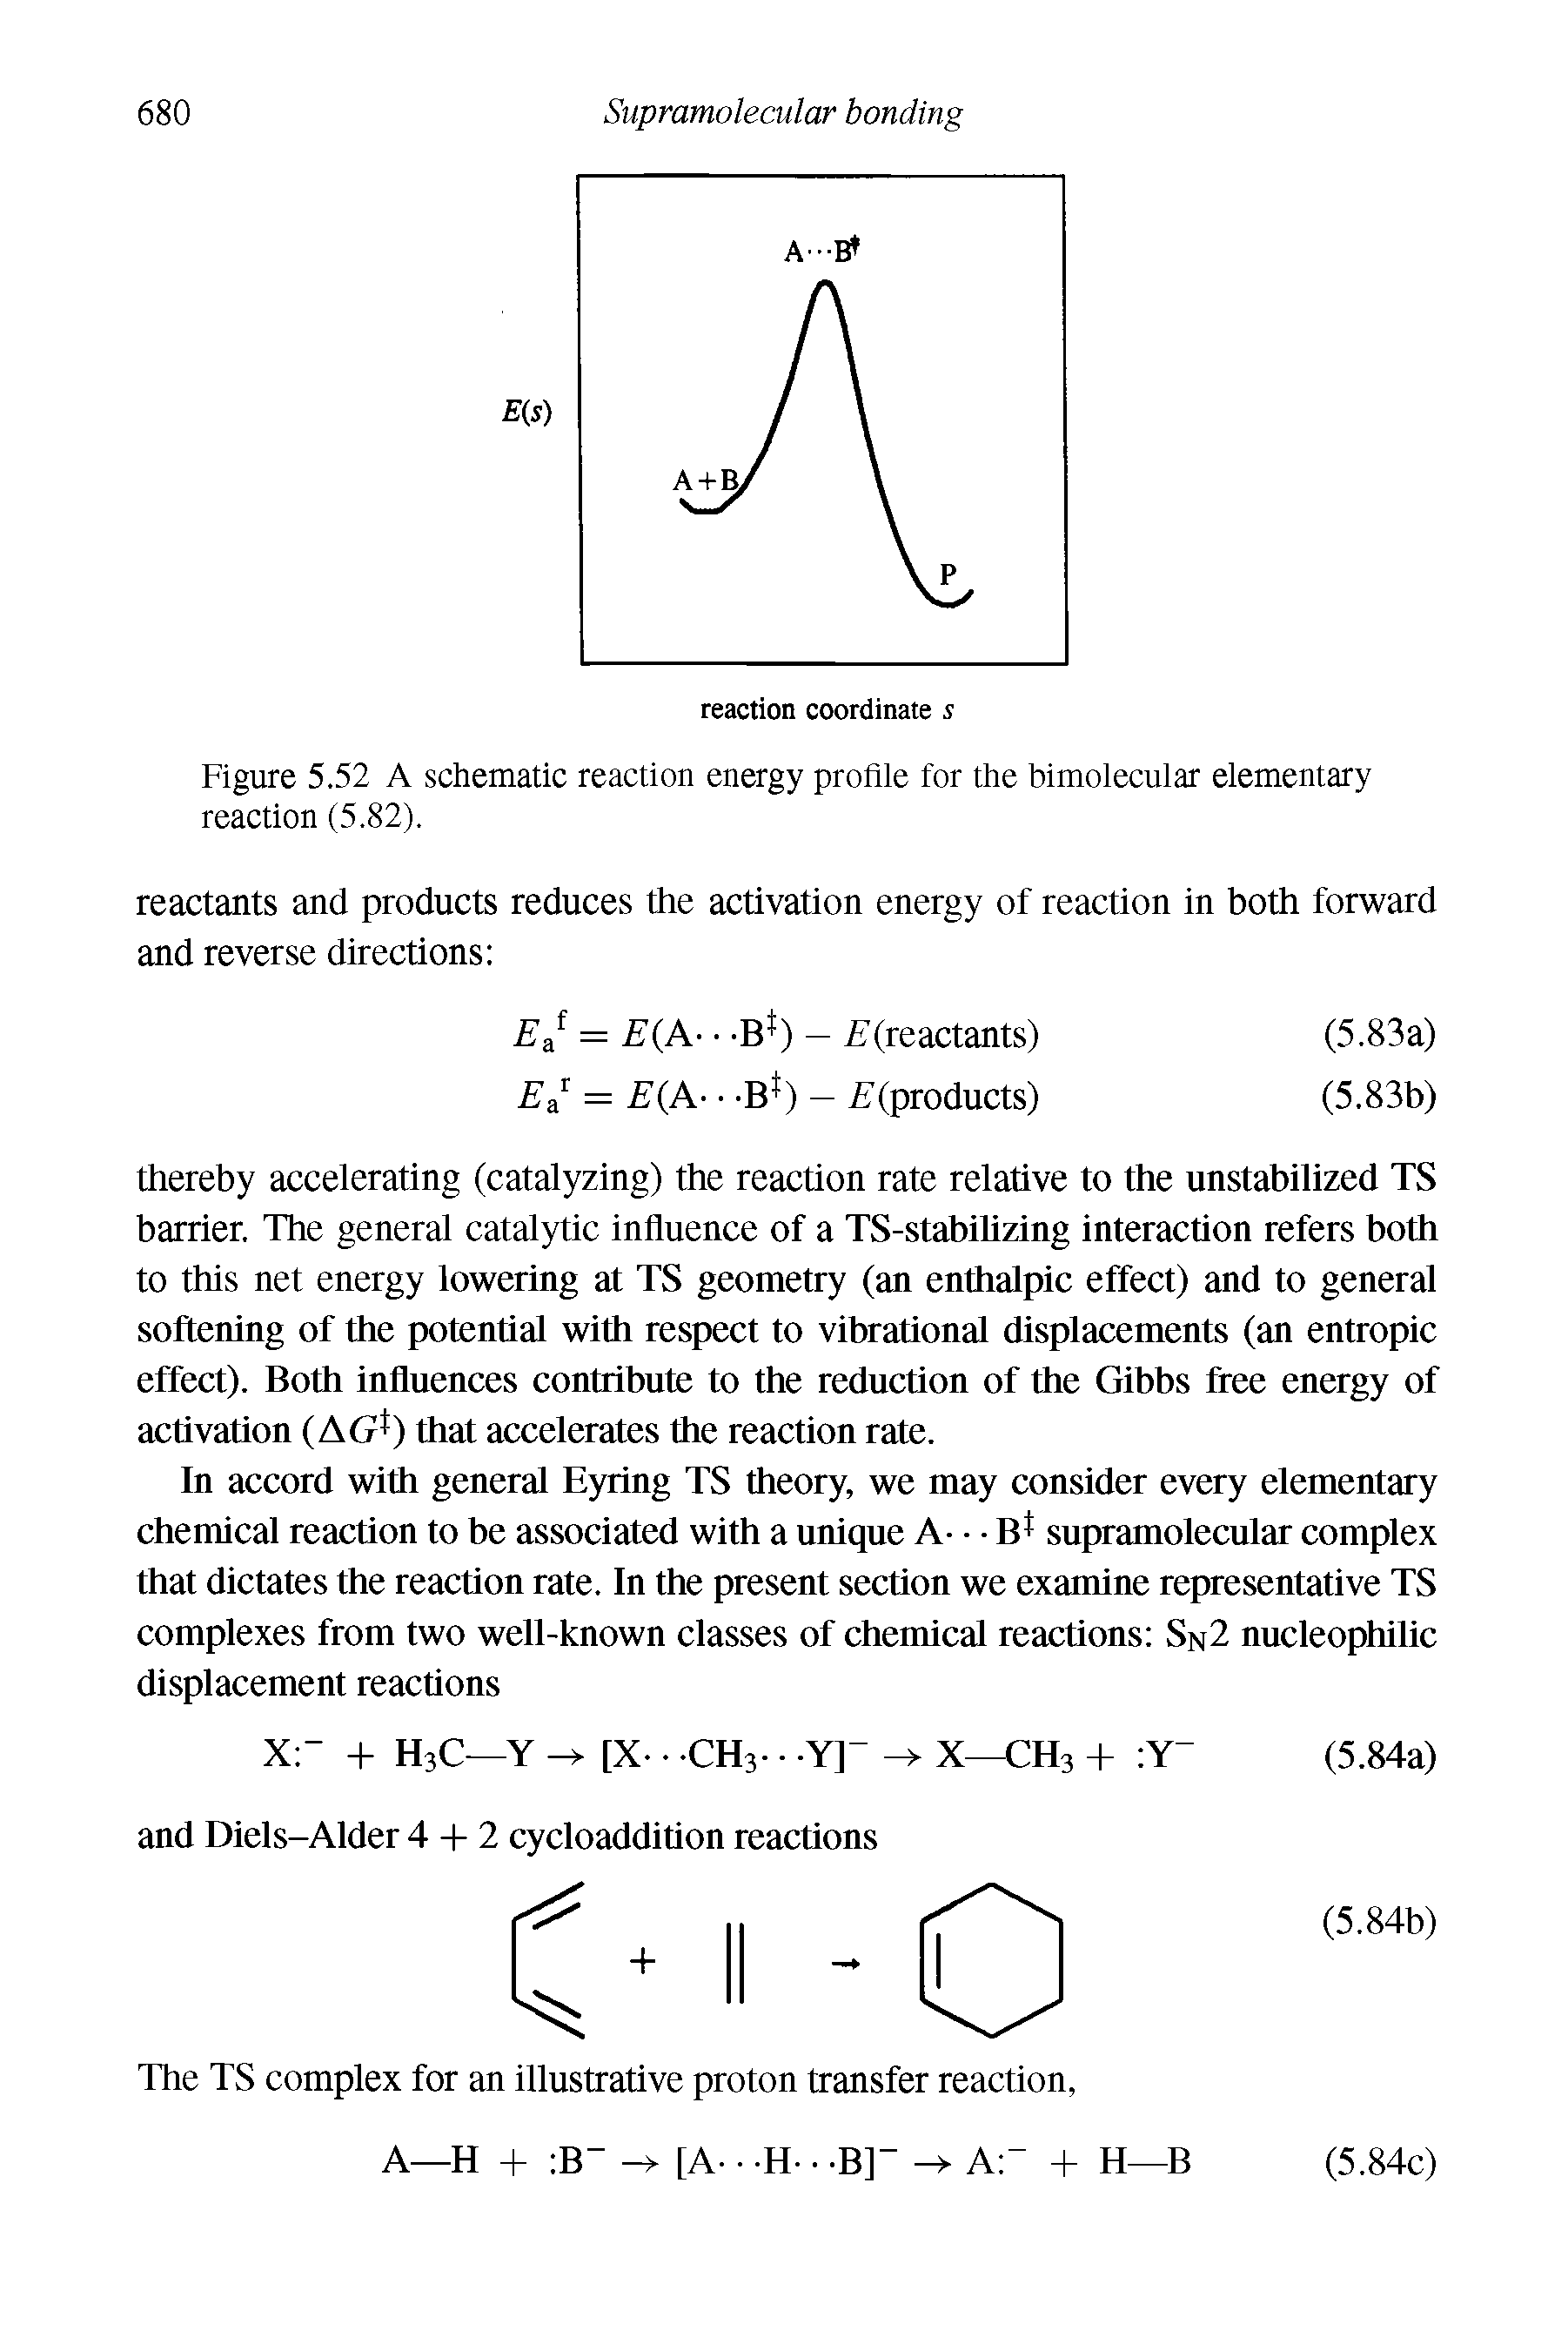 Figure 5.52 A schematic reaction energy profile for the bimolecular elementary reaction (5.82).